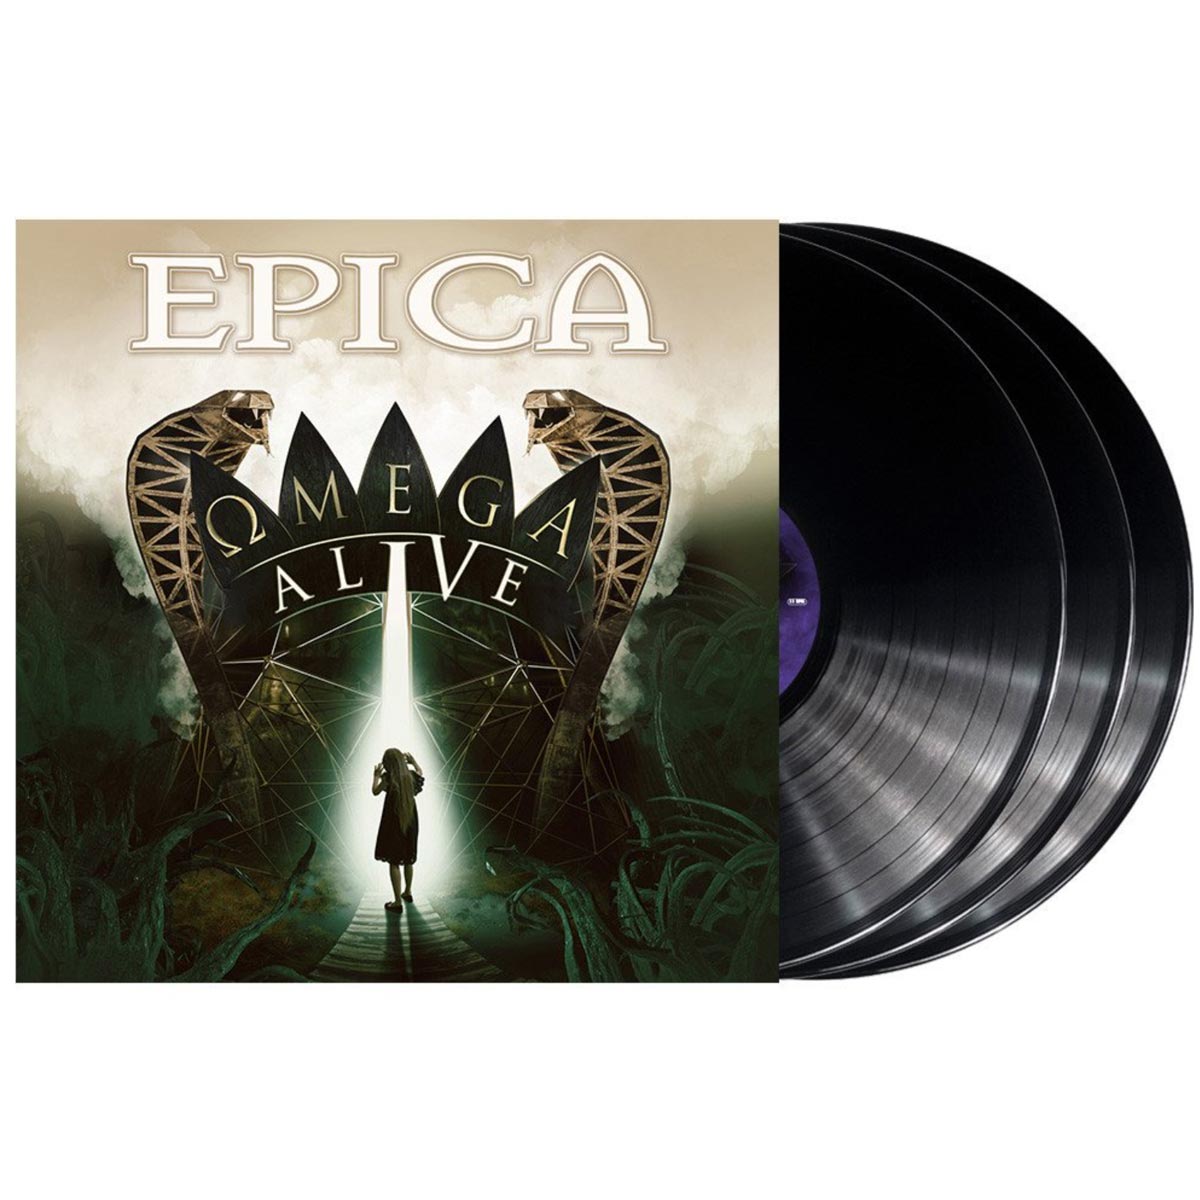 Epica: Omega alive (Black/Ltd)